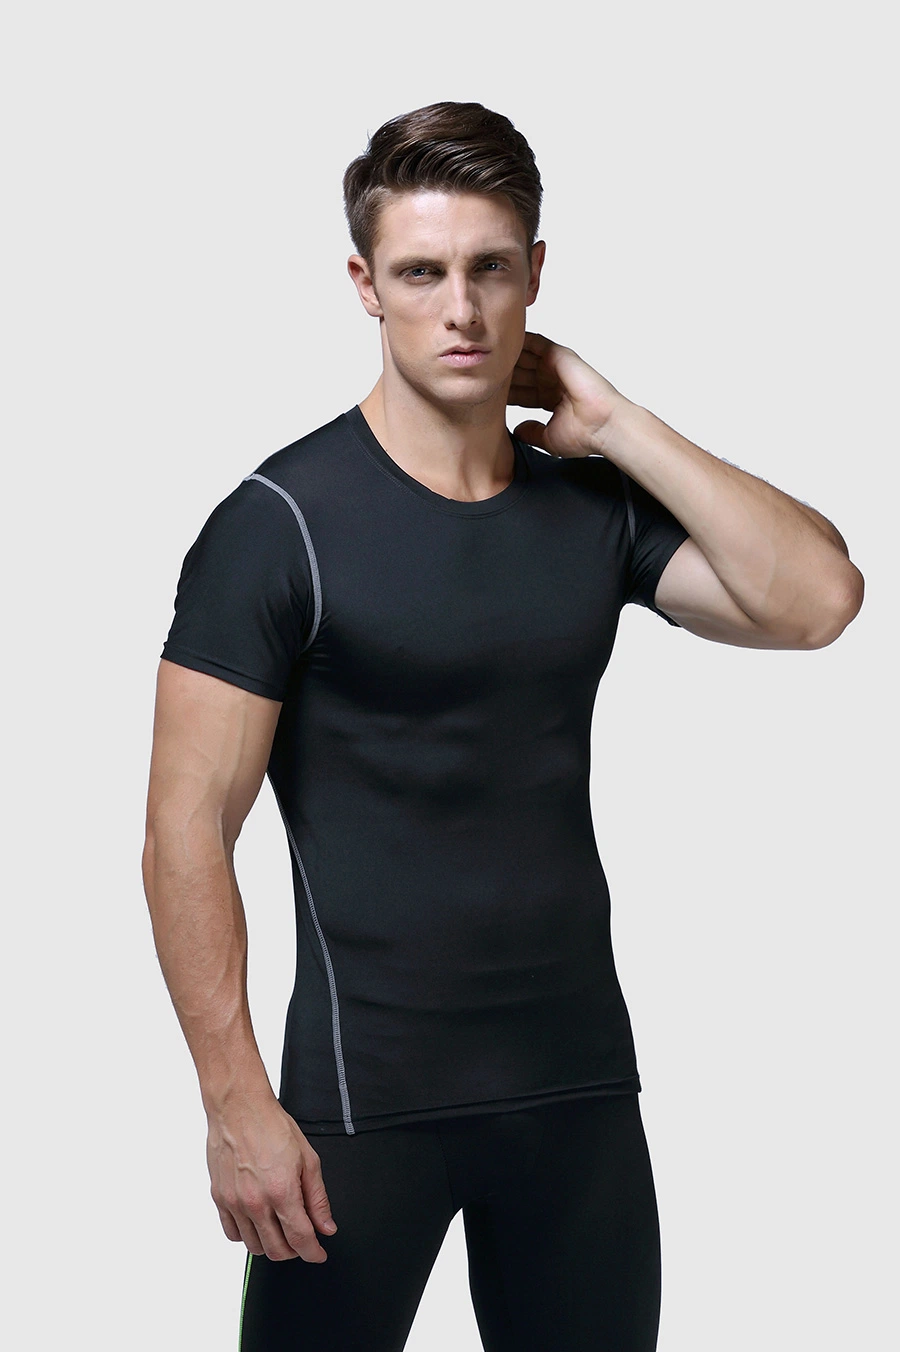 Wholesales ropa hombre ropa deportiva Fitness Gimnasio correr entrenamiento Camiseta activo